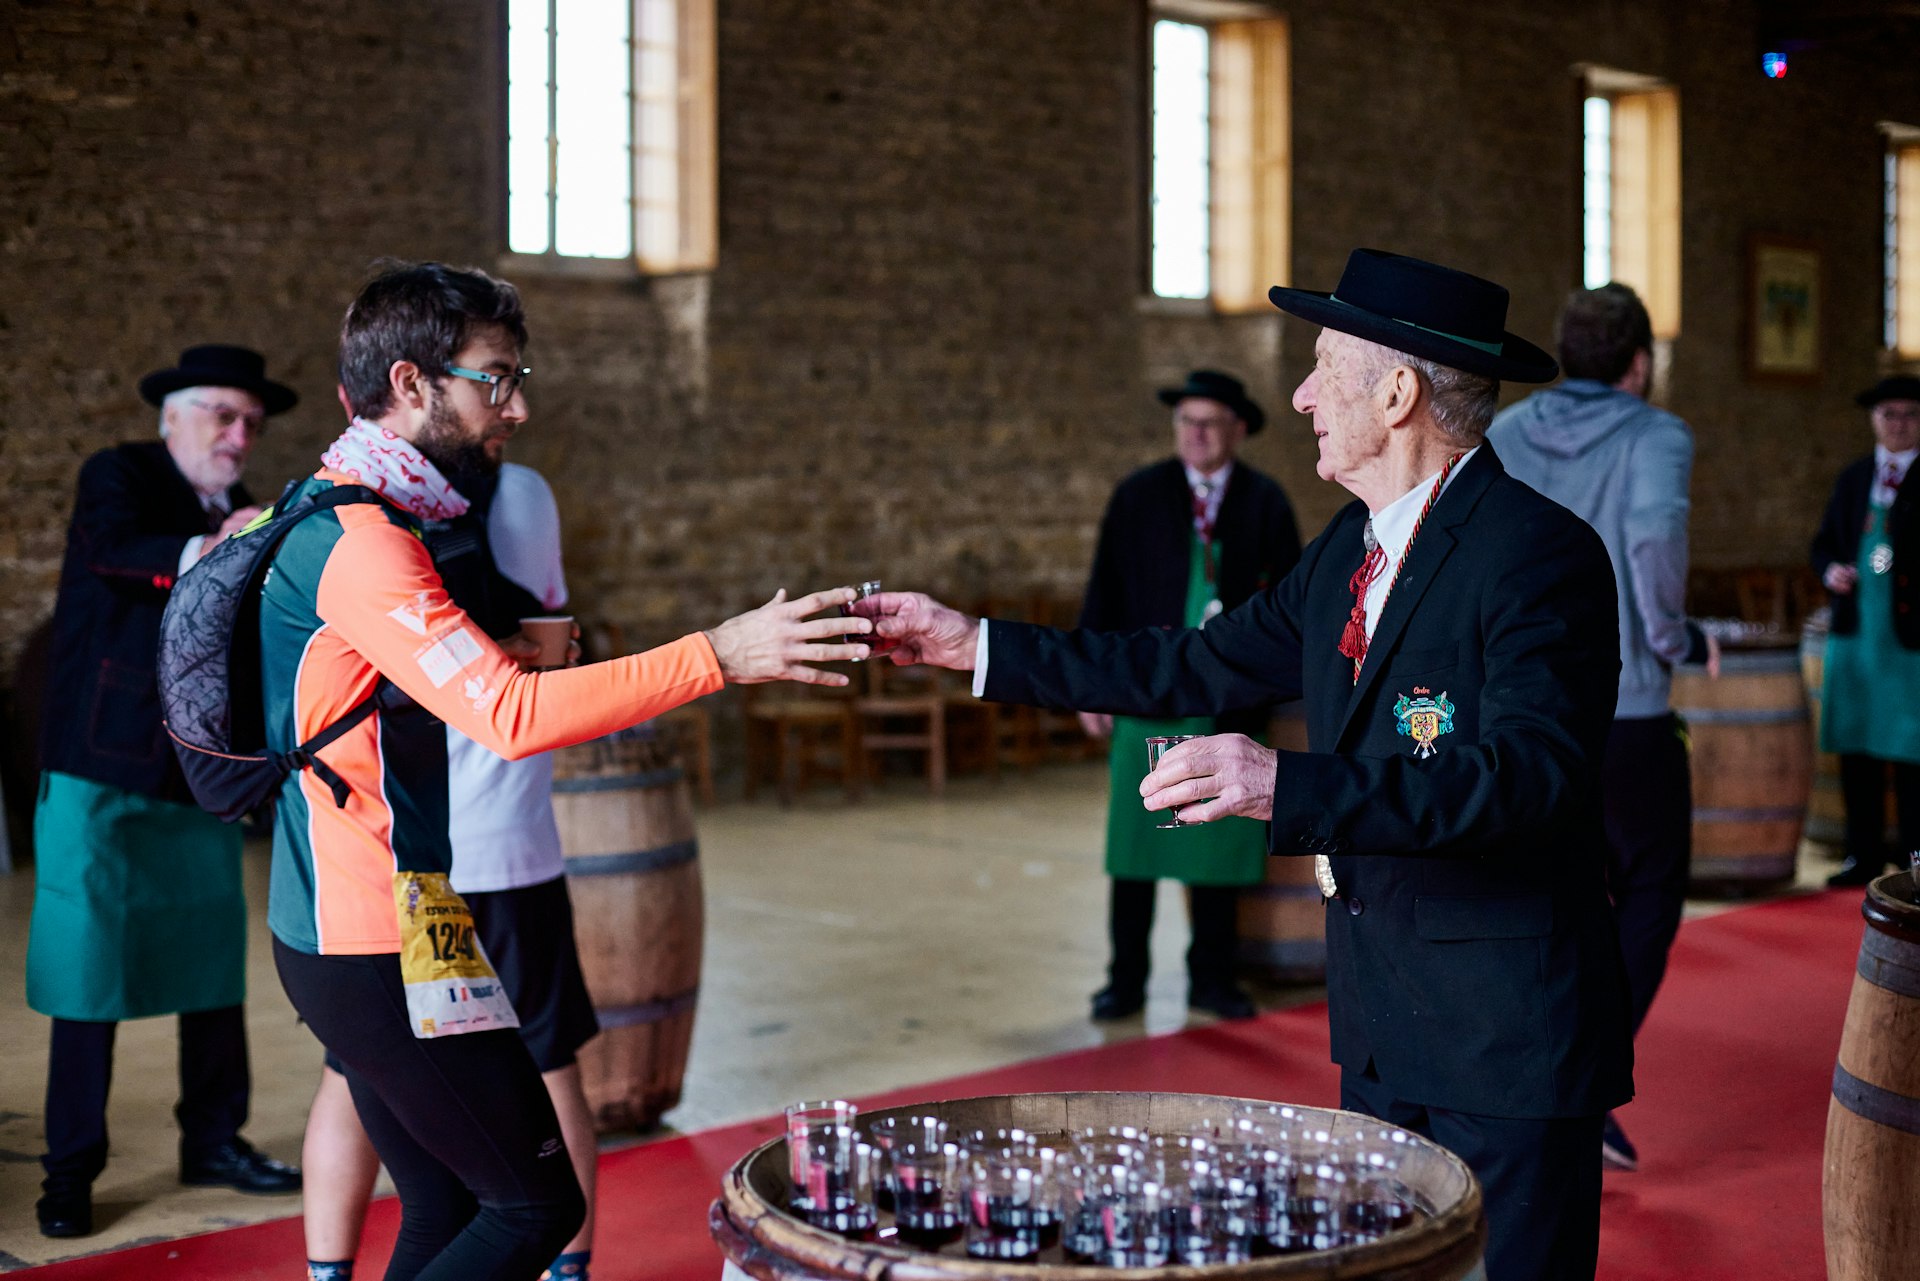 Beaujolais Wine Marathon participants enjoy a glass of wine after their race